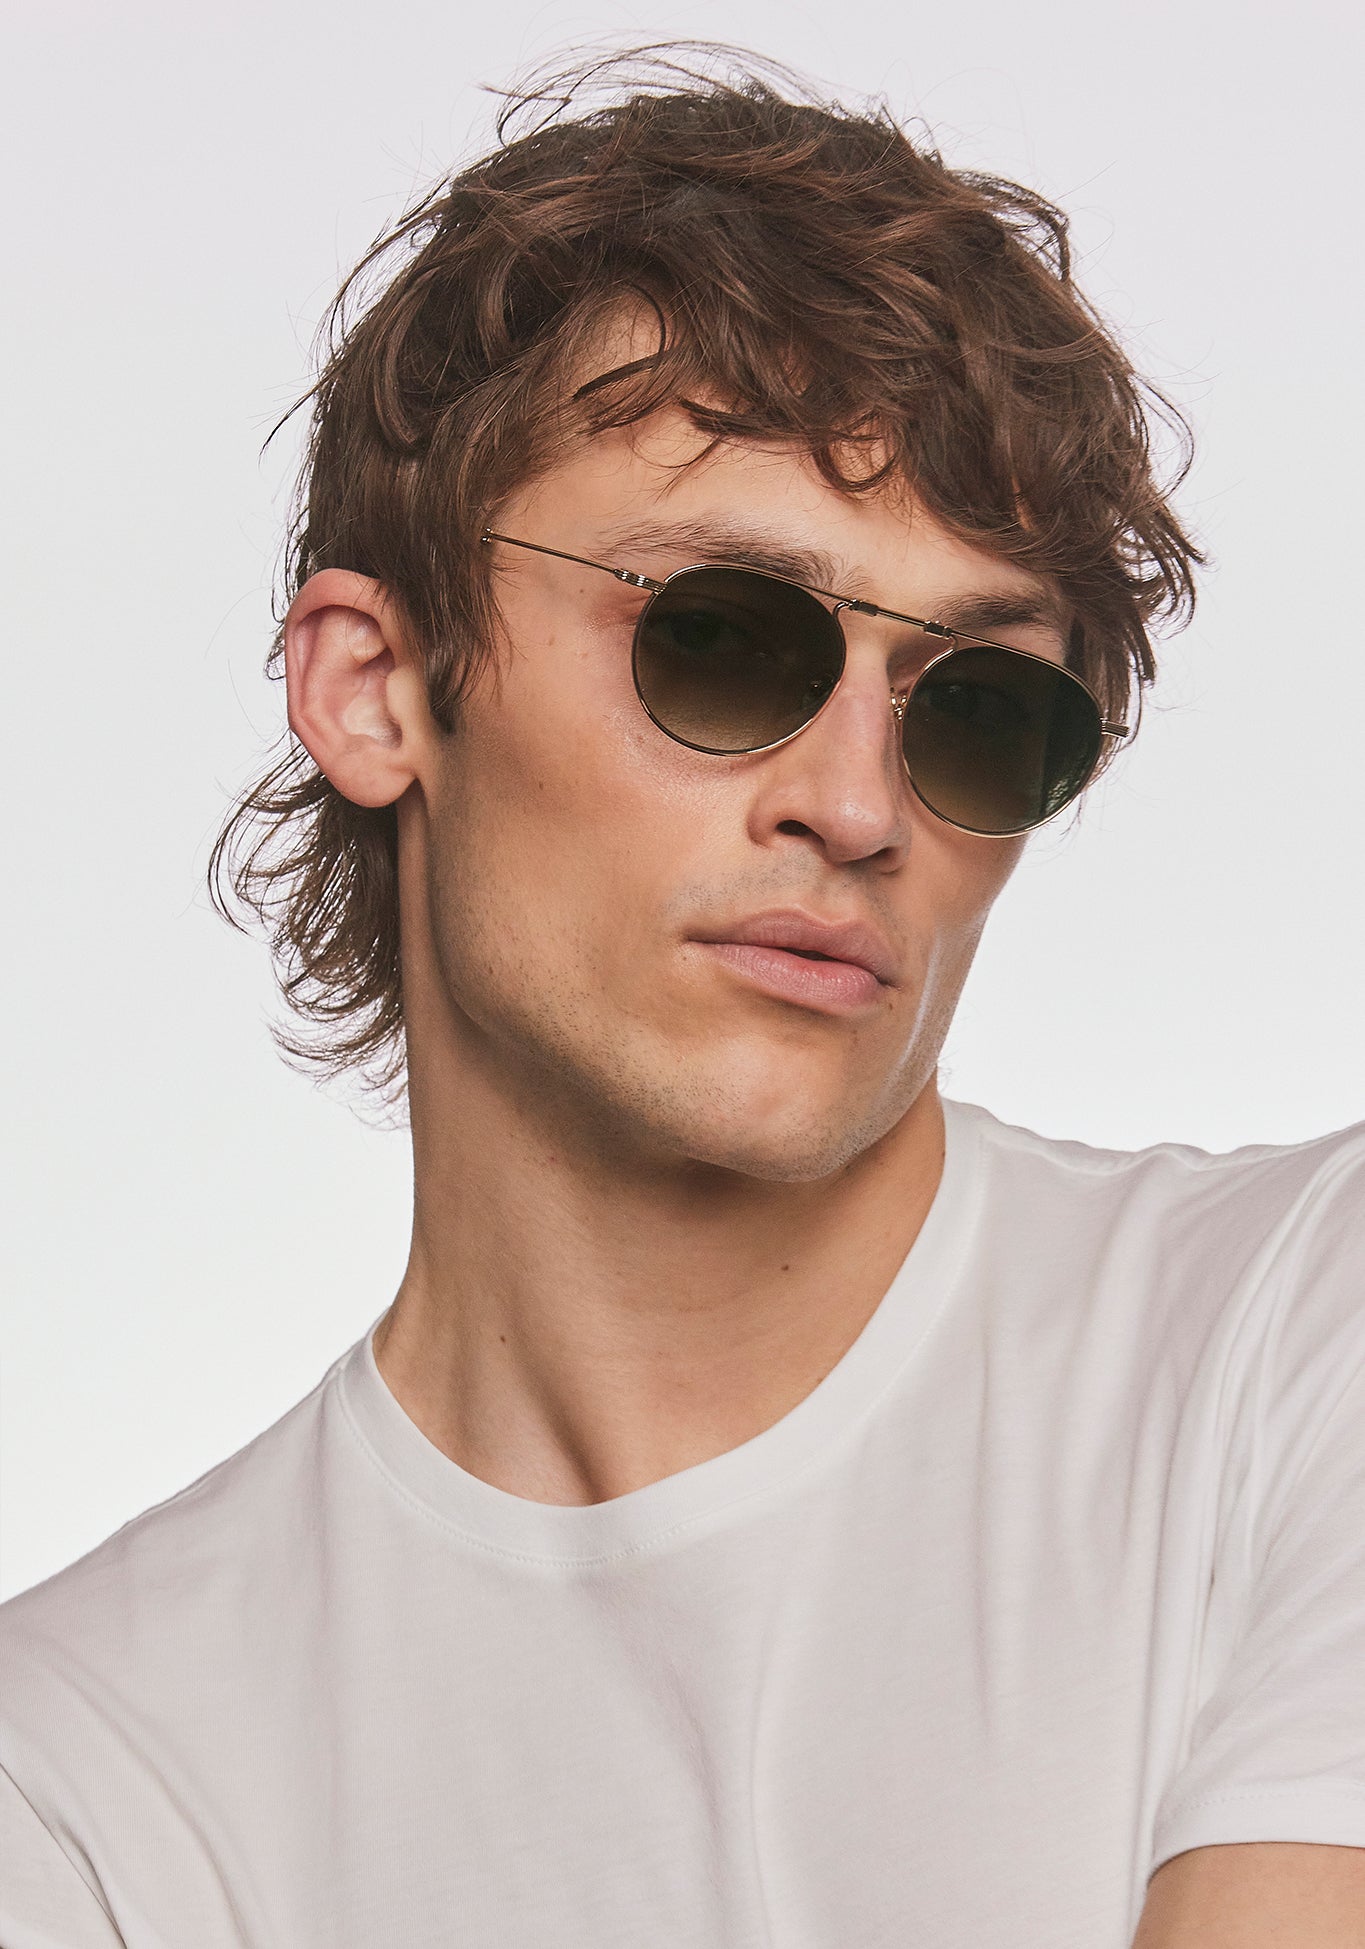 RAMPART FOLD | 12K + Green Tea, Luxury Foldable KREWE Sunglasses mens model | Model: Cameron